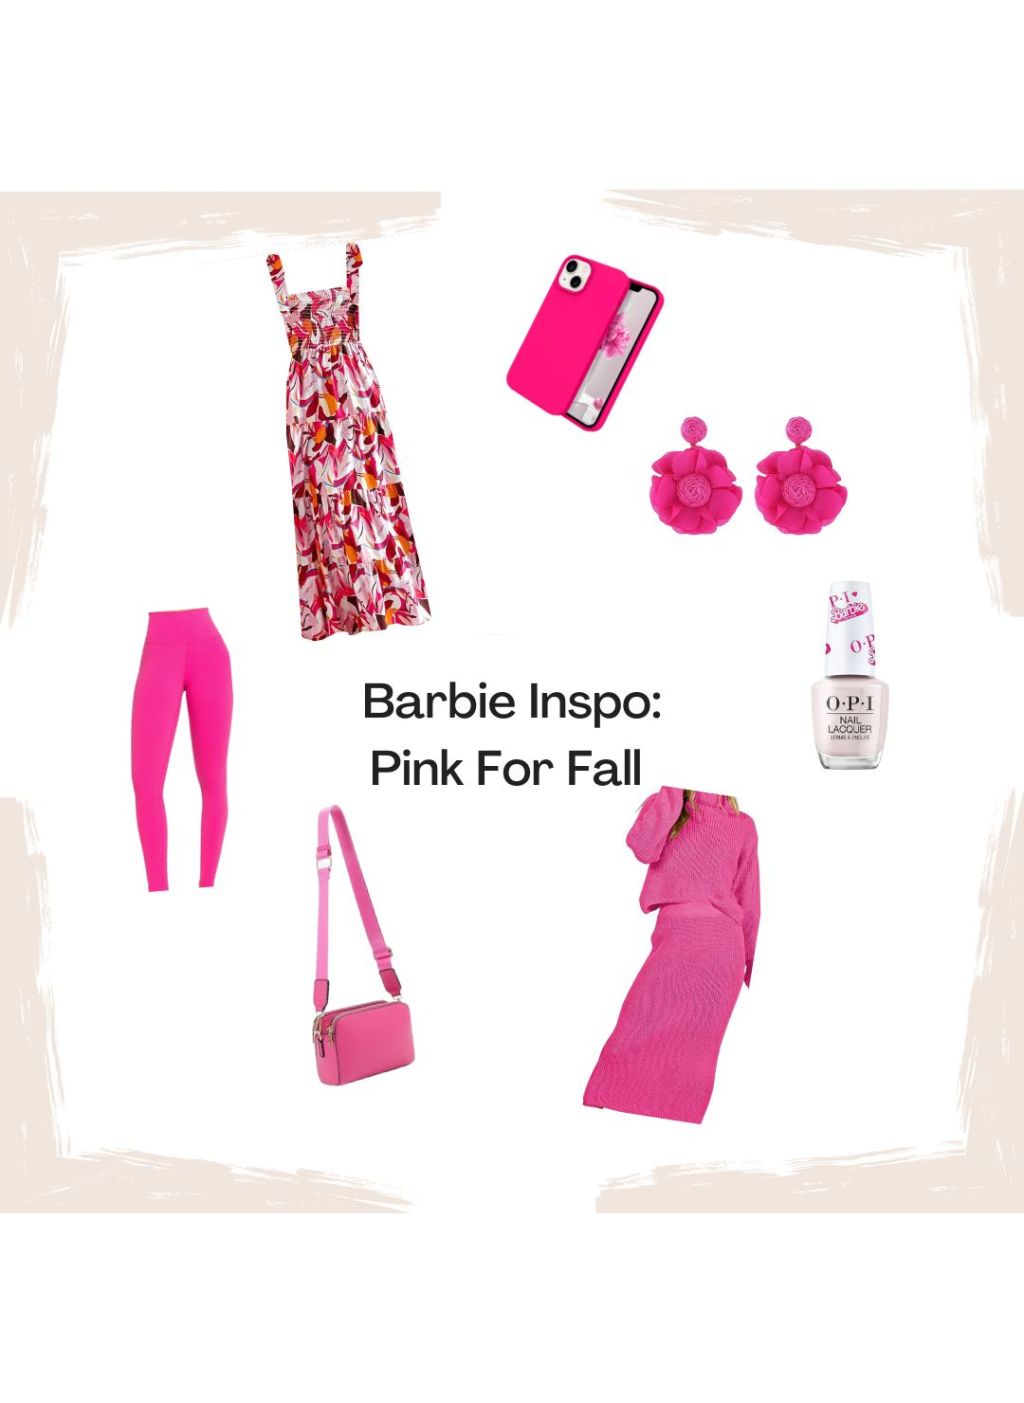 Barbie Inspo for Fall Fashion